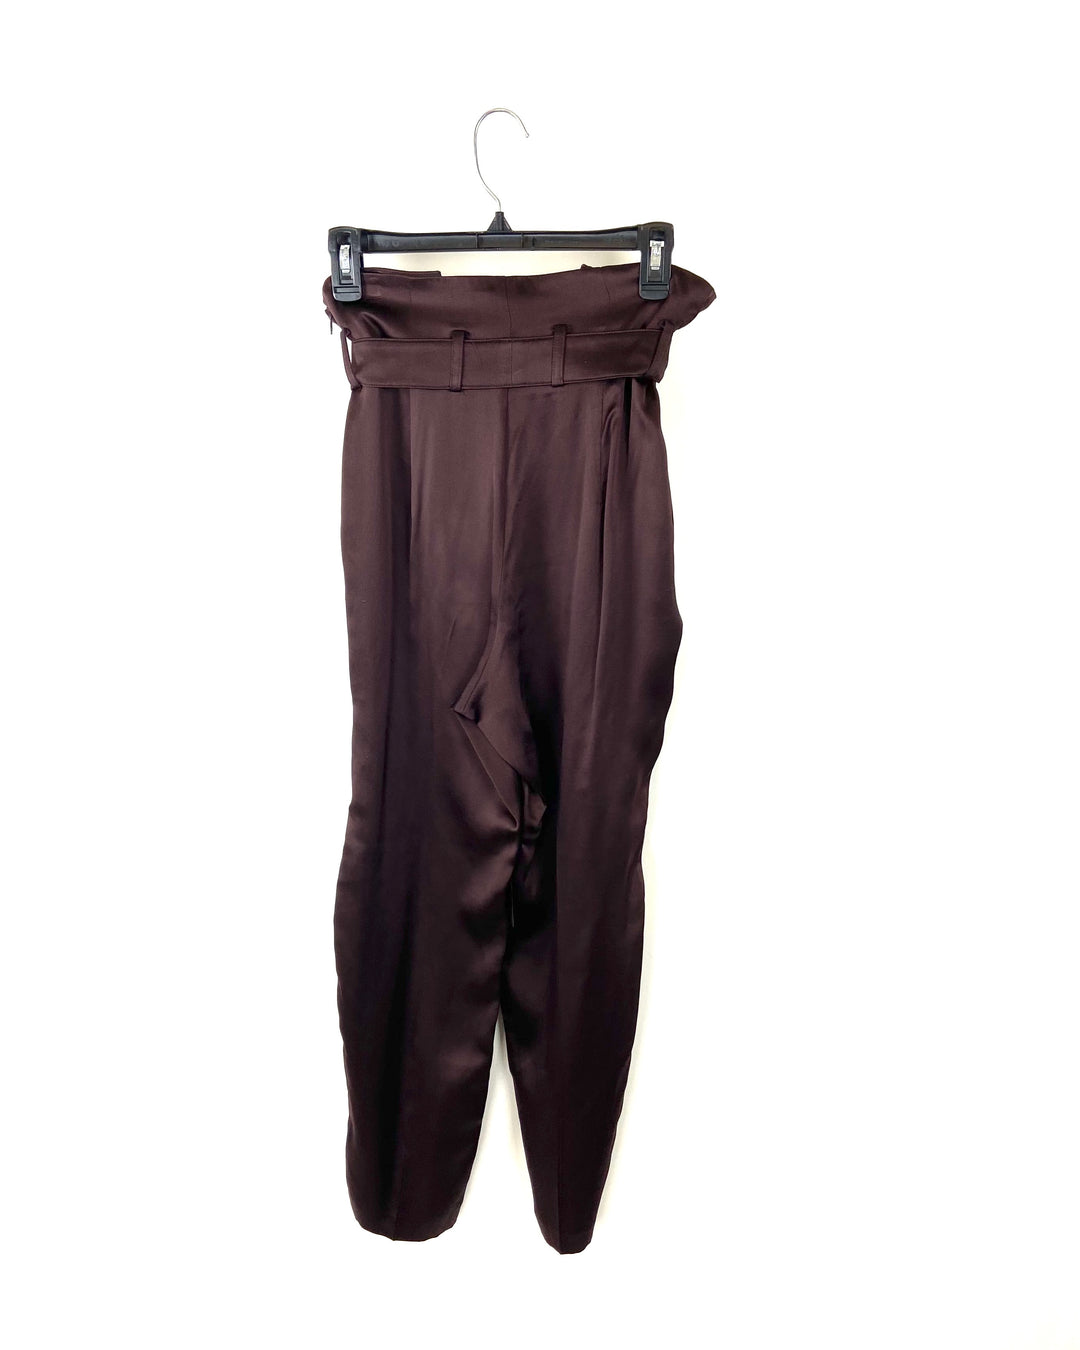 Brown Paper Bag Pants - Size 4-6